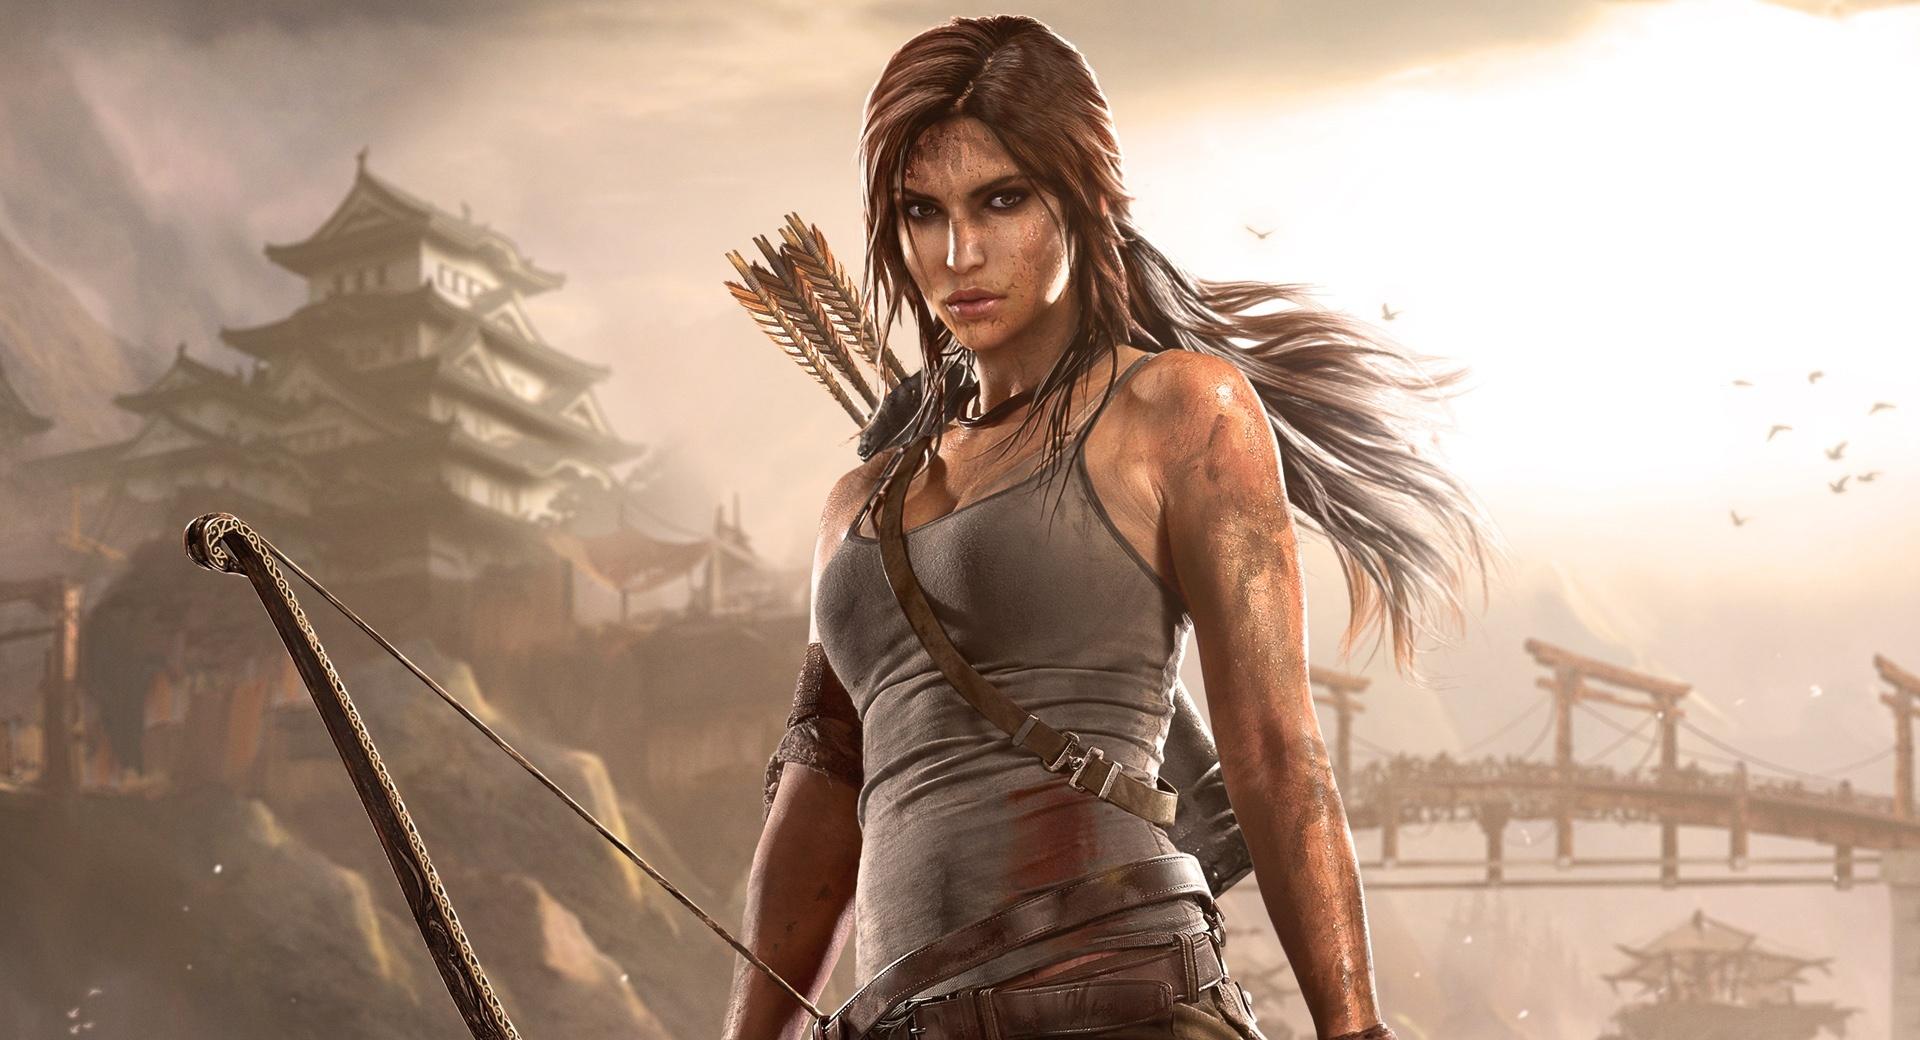 Tomb Raider 2013 at 1024 x 1024 iPad size wallpapers HD quality